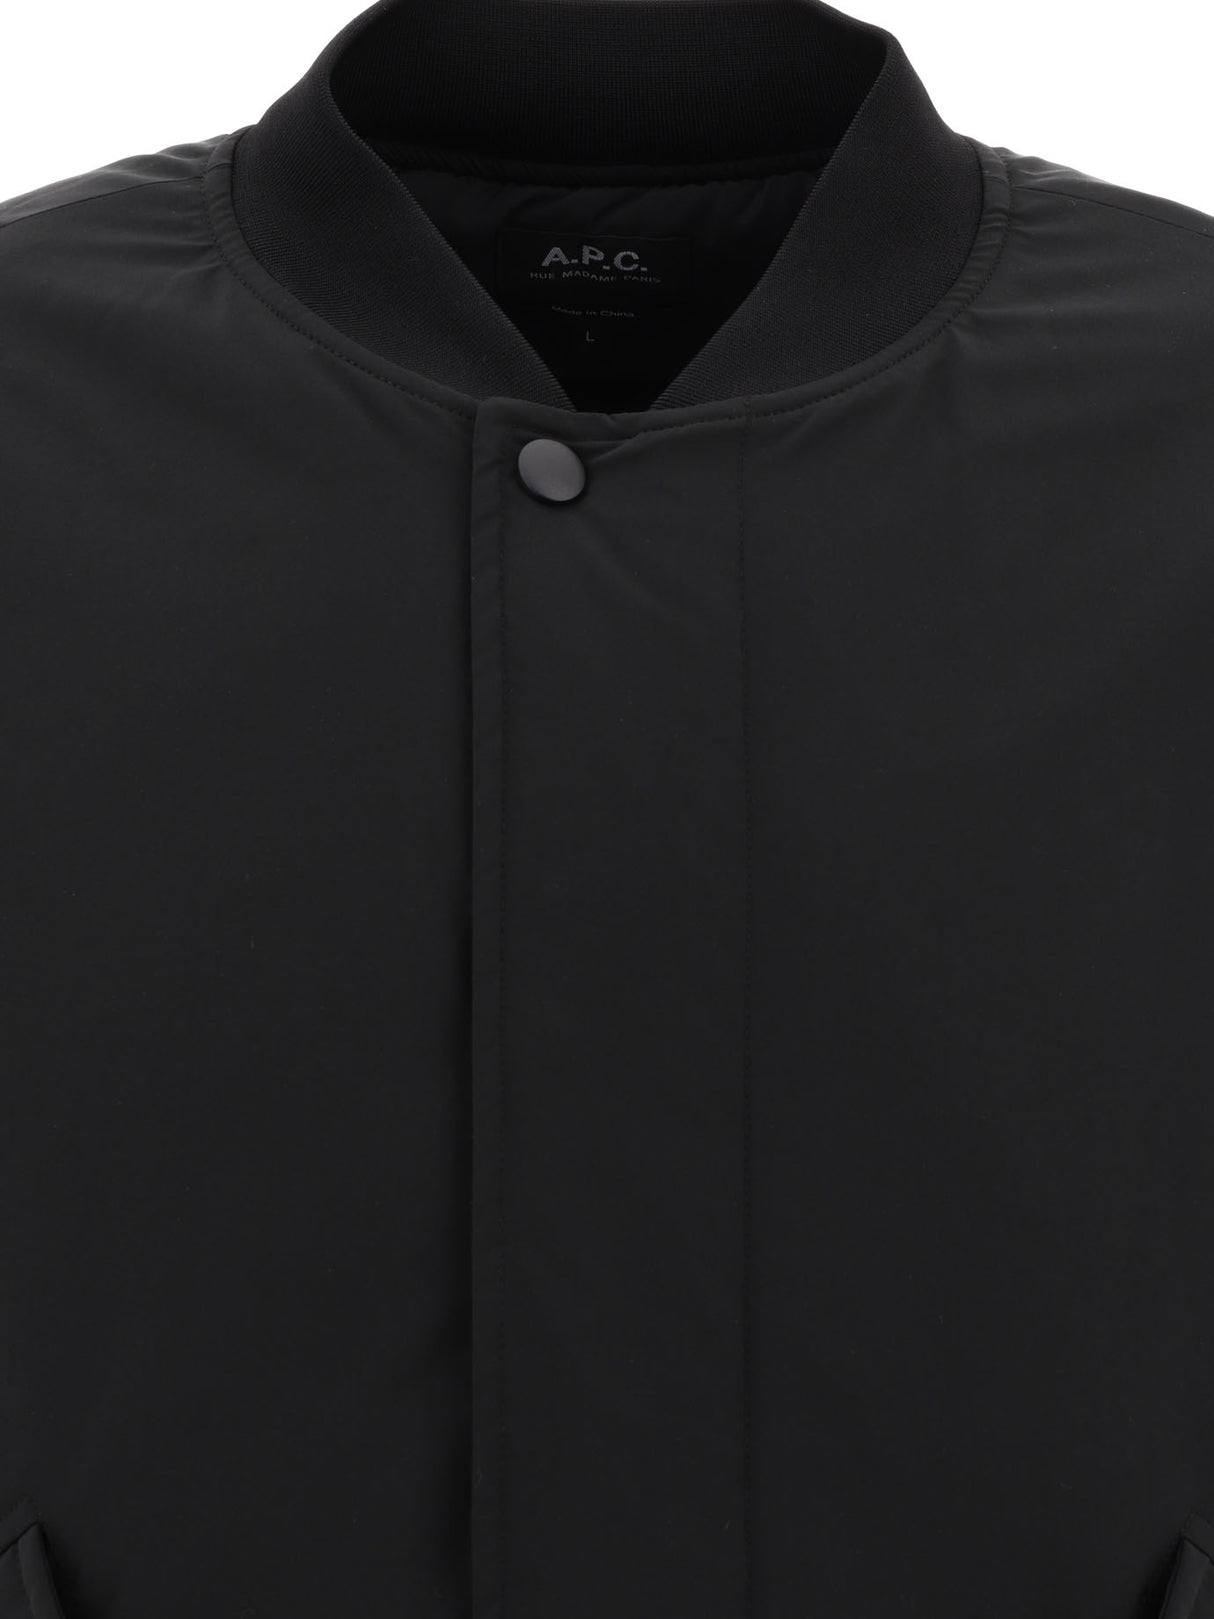 A.P.C. Sleek Black Bomber Jacket for Men - Seasonal Essential for FW24